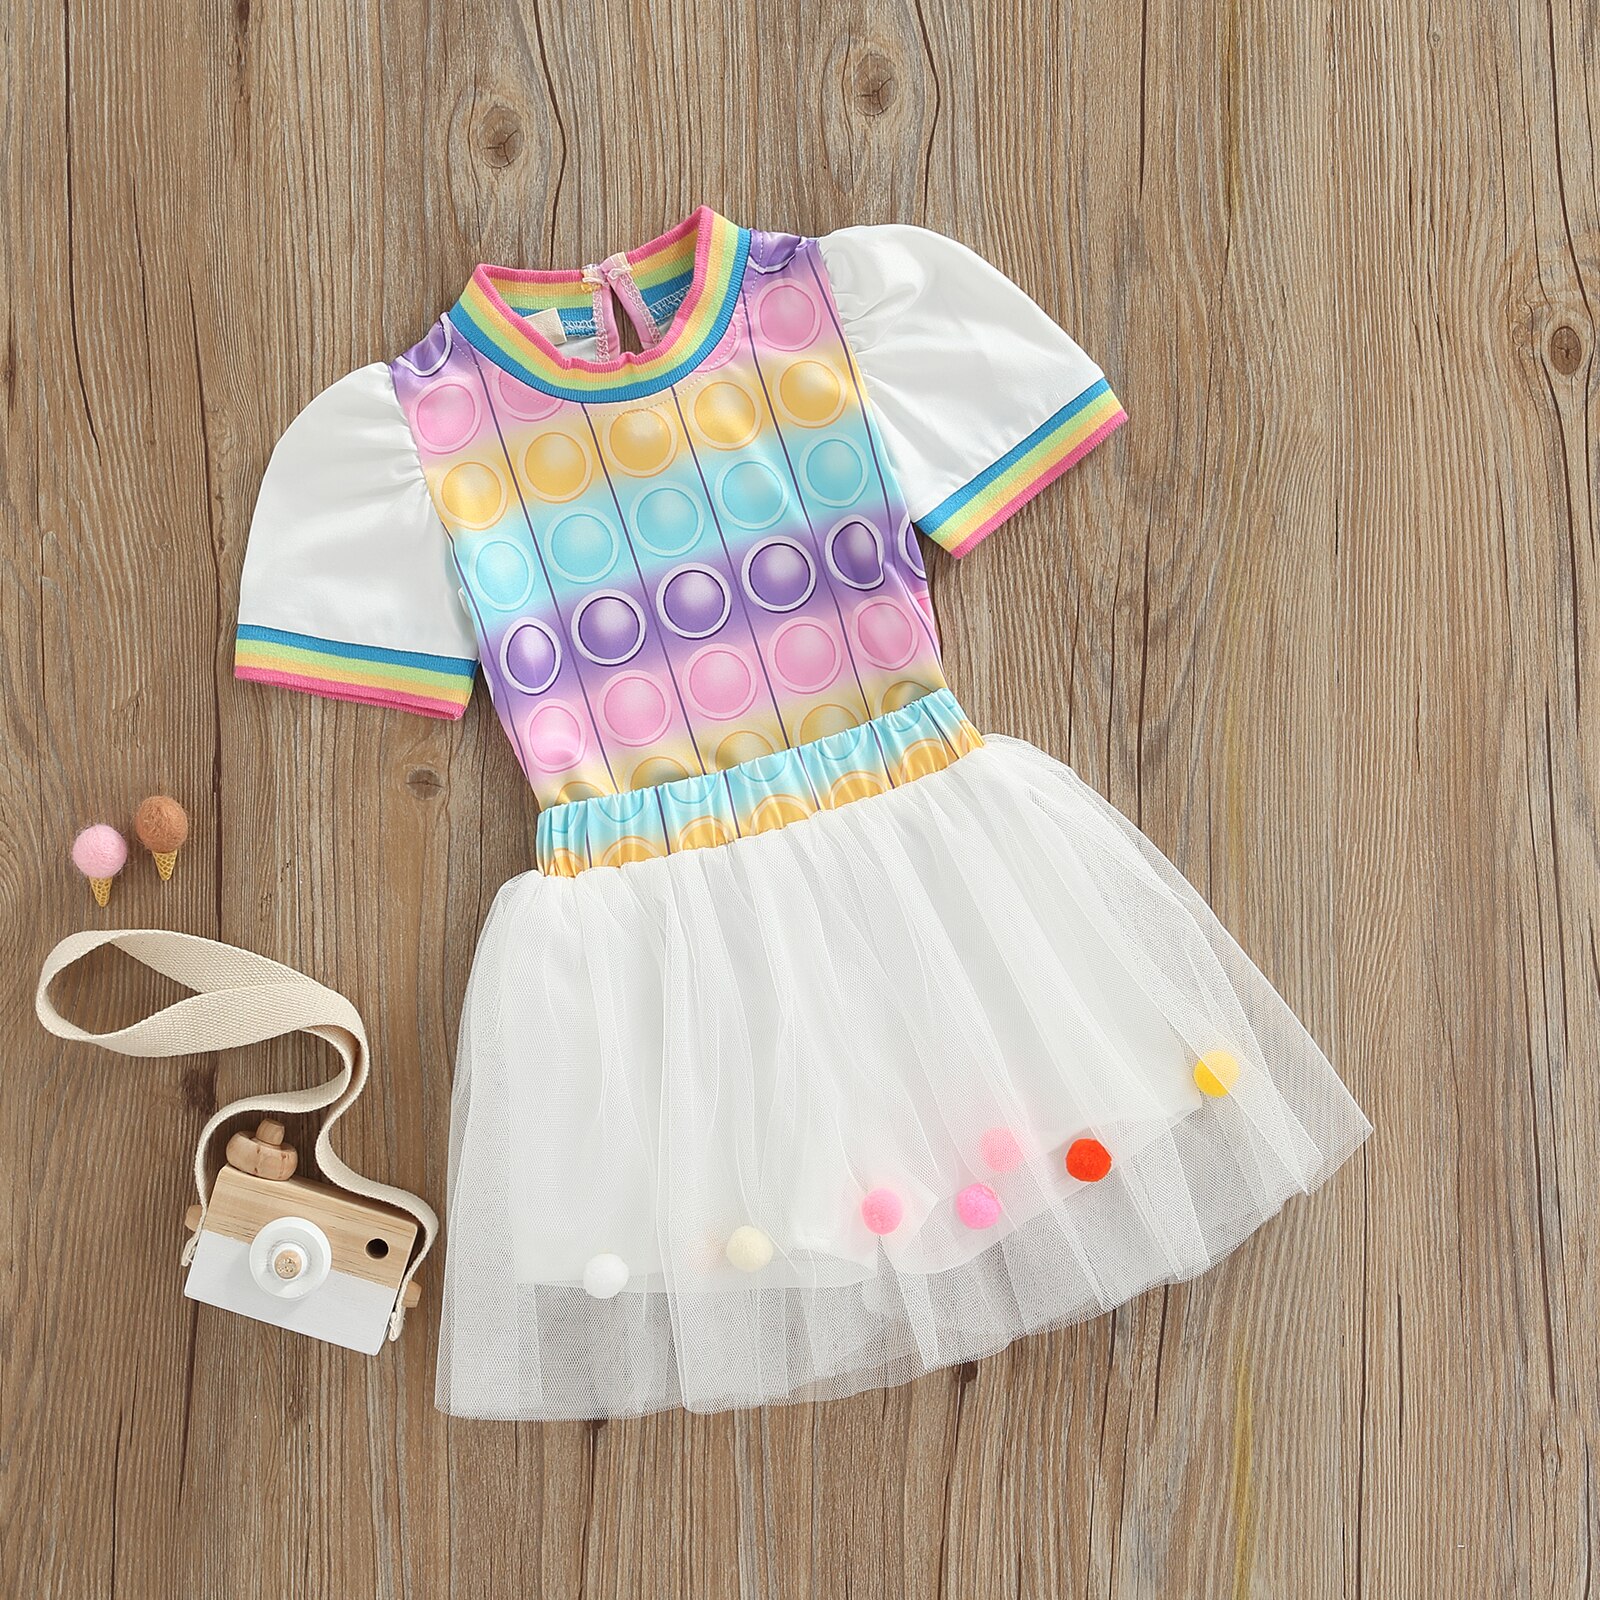 Citgeett-Summer-Kids-Girls-Short-Skirt-Suit-Pattern-Rainbow-Stripes-Short-Sleeves-Romper-Jumpsuit-Tutu-Skirt-2